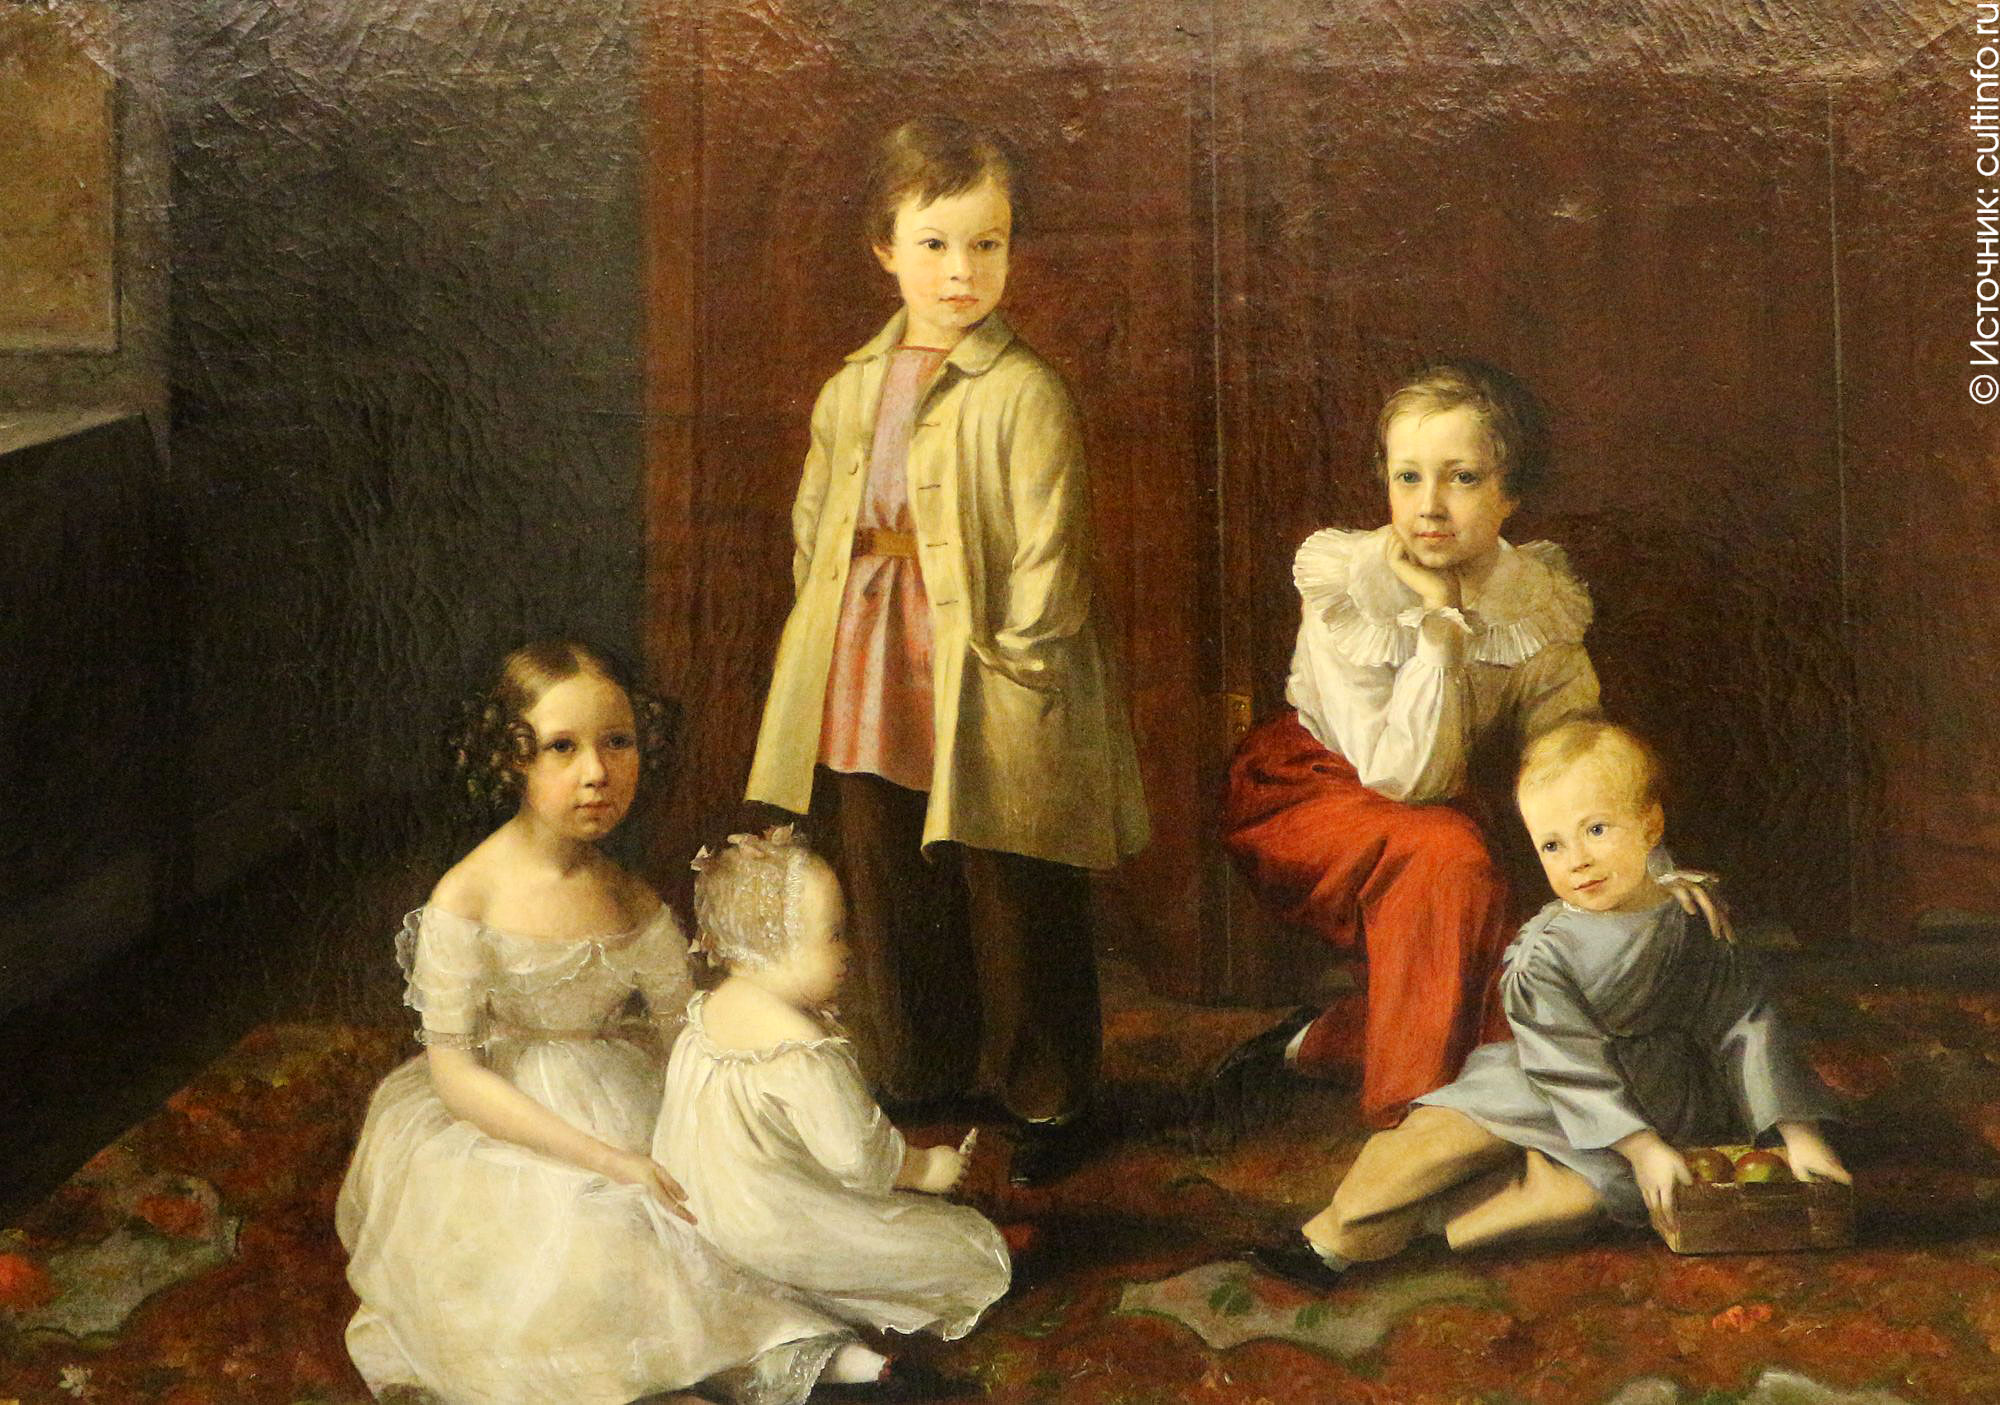 Фото дворянских детей 19 века